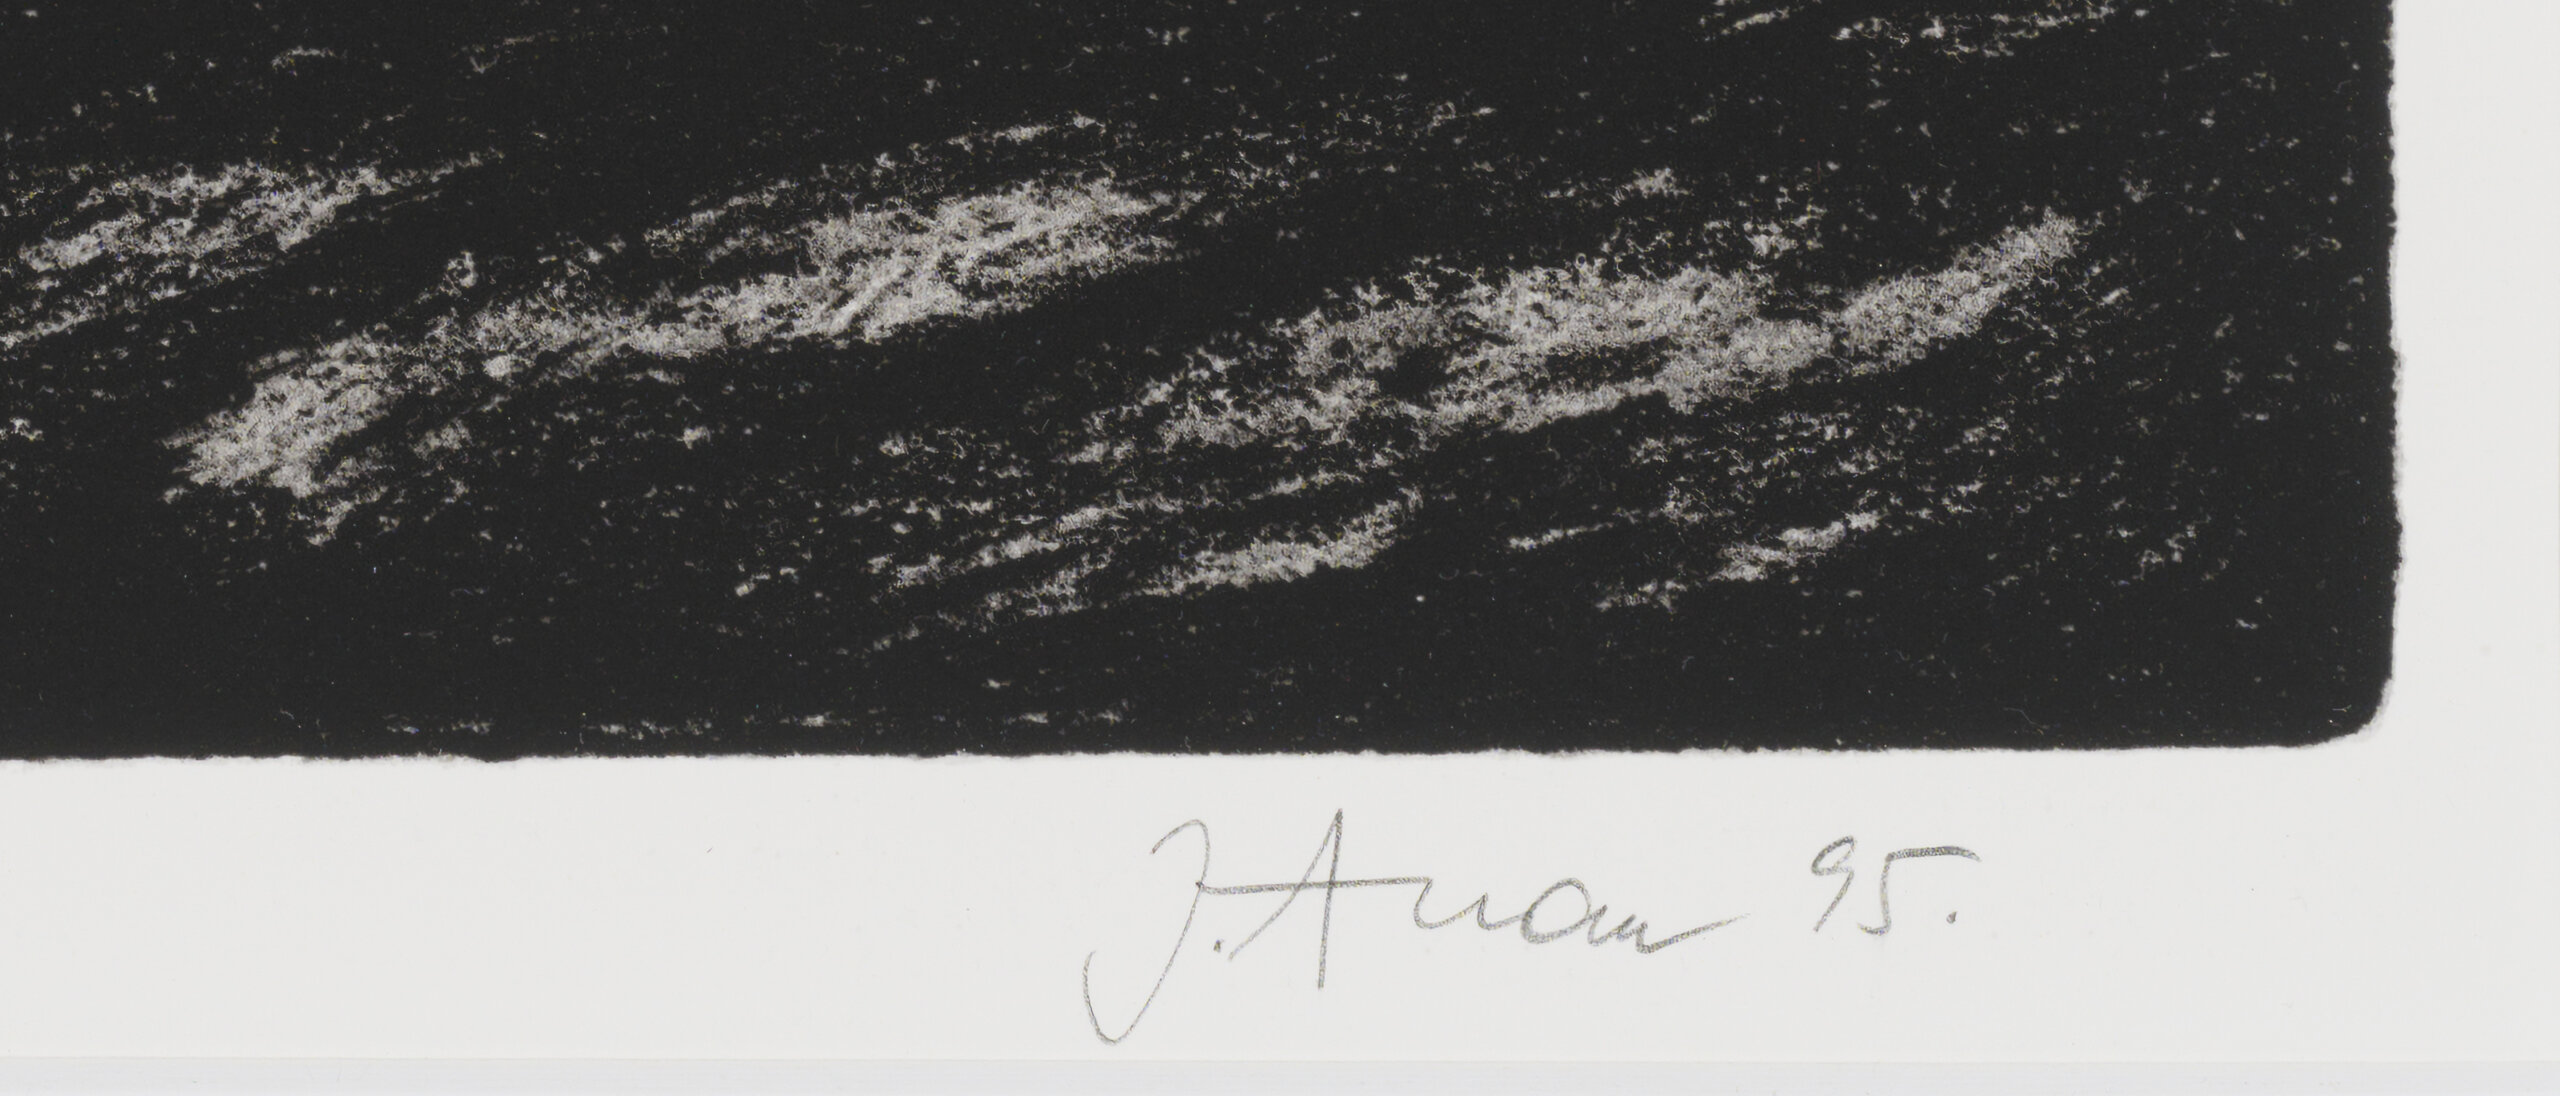 Jüri Arrak “Tiiger”, 1995. Km 36 x 43 cm.